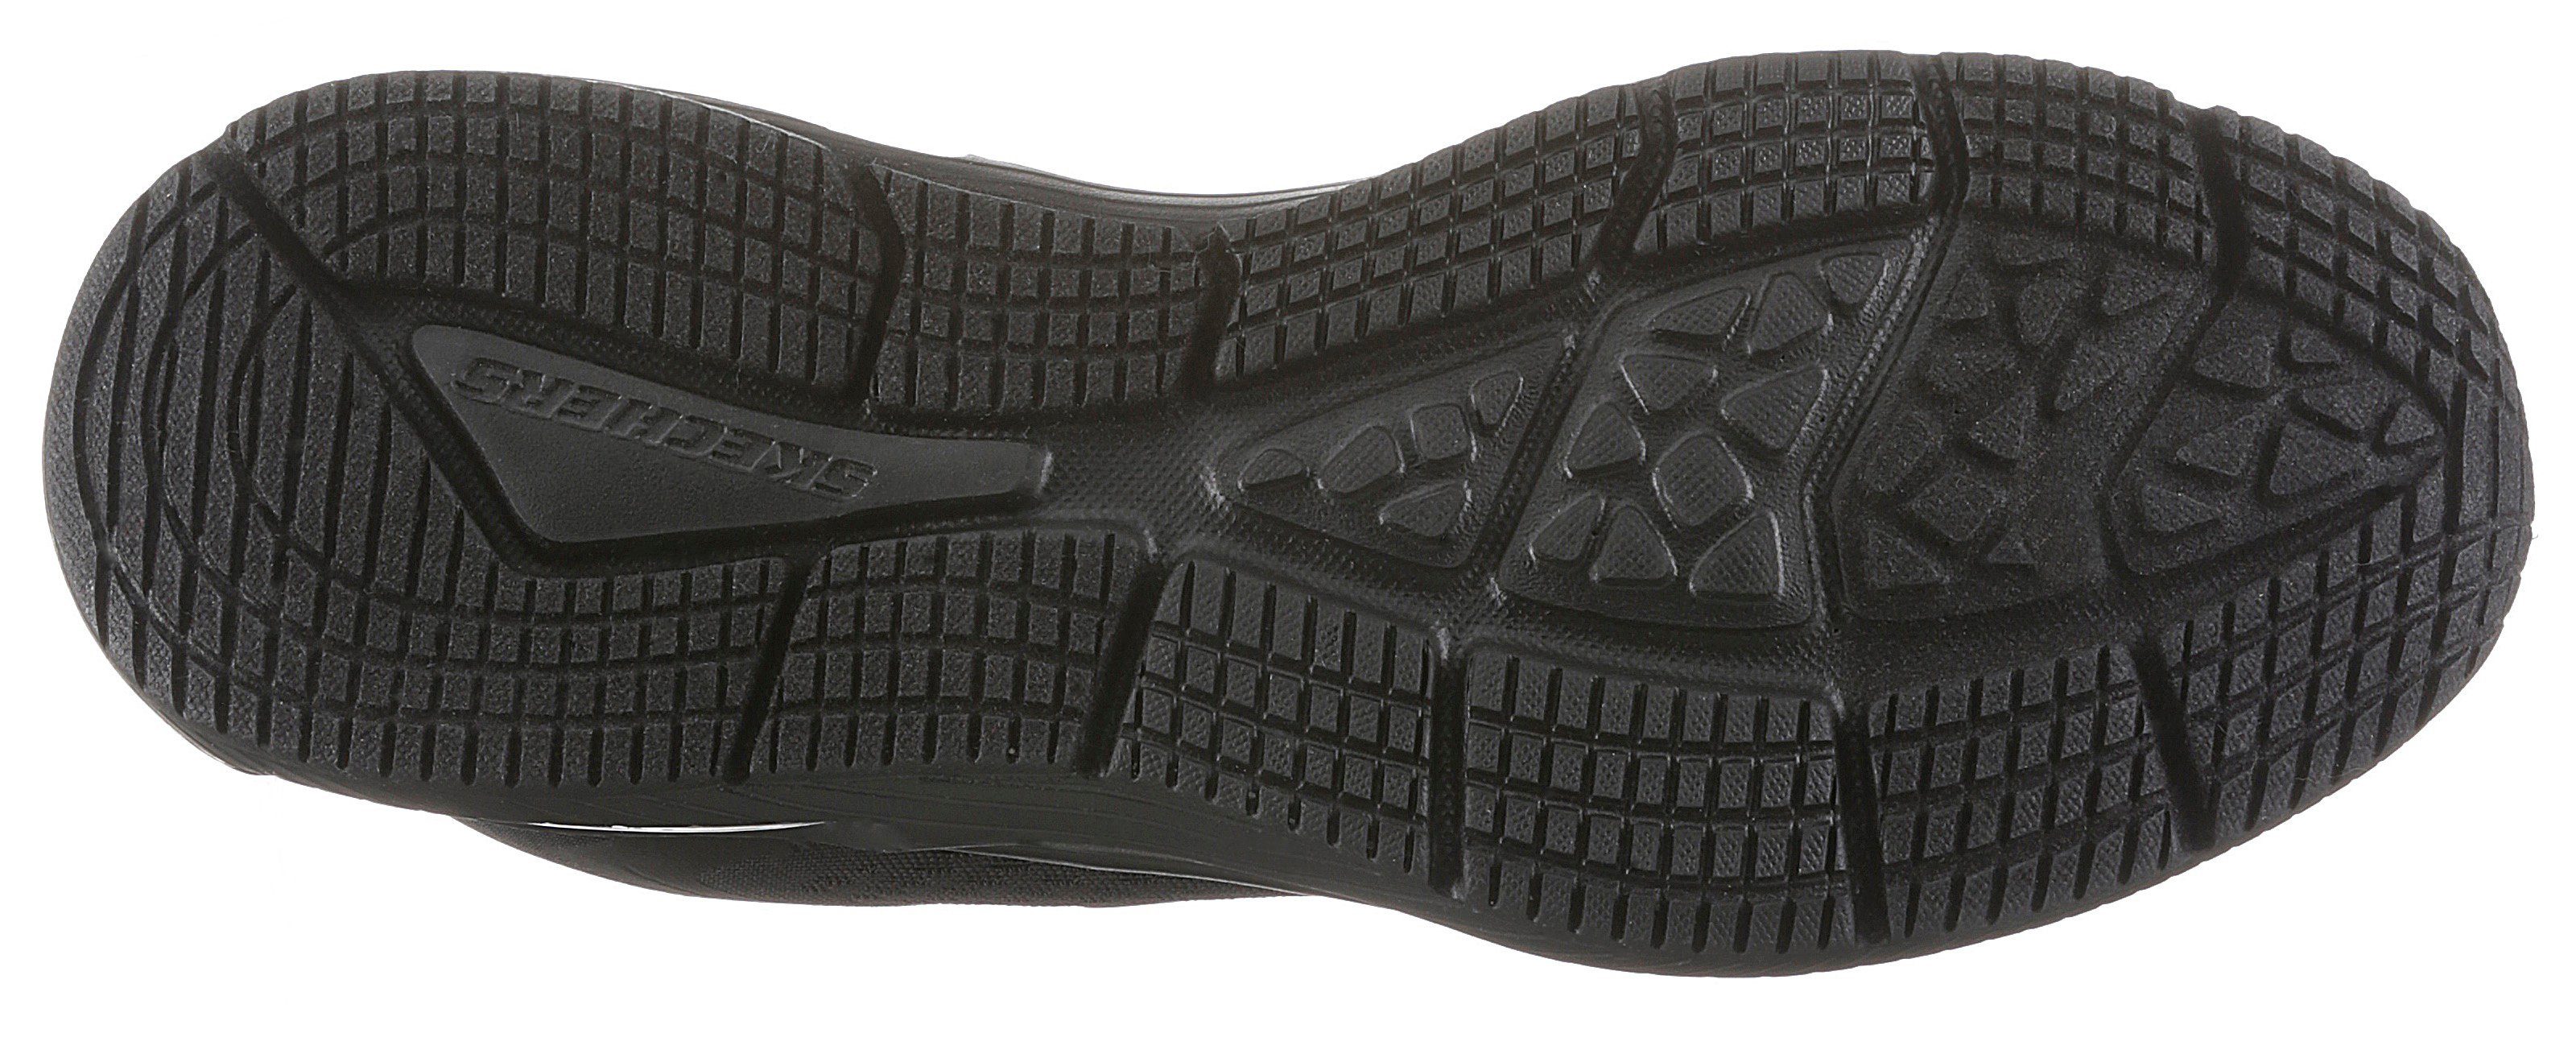 Dyna schwarz Foam Memory Air-Cooled Sneaker Skechers Air mit